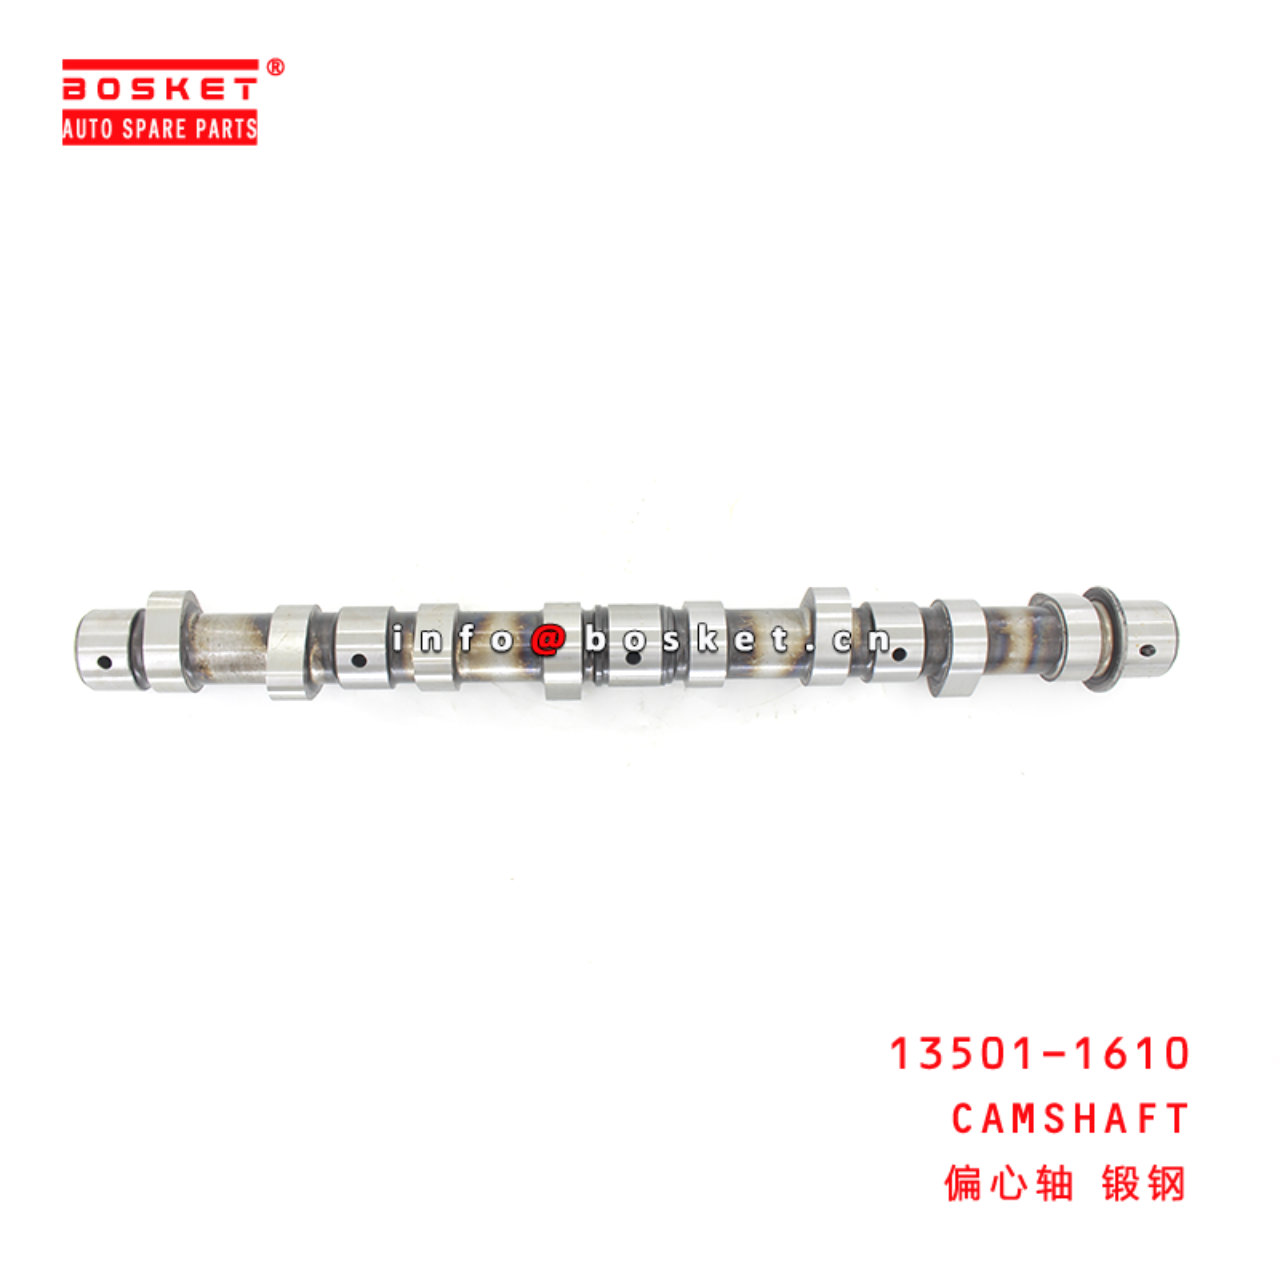 13501-1610 Camshaft Suitable for ISUZU HINO J05E